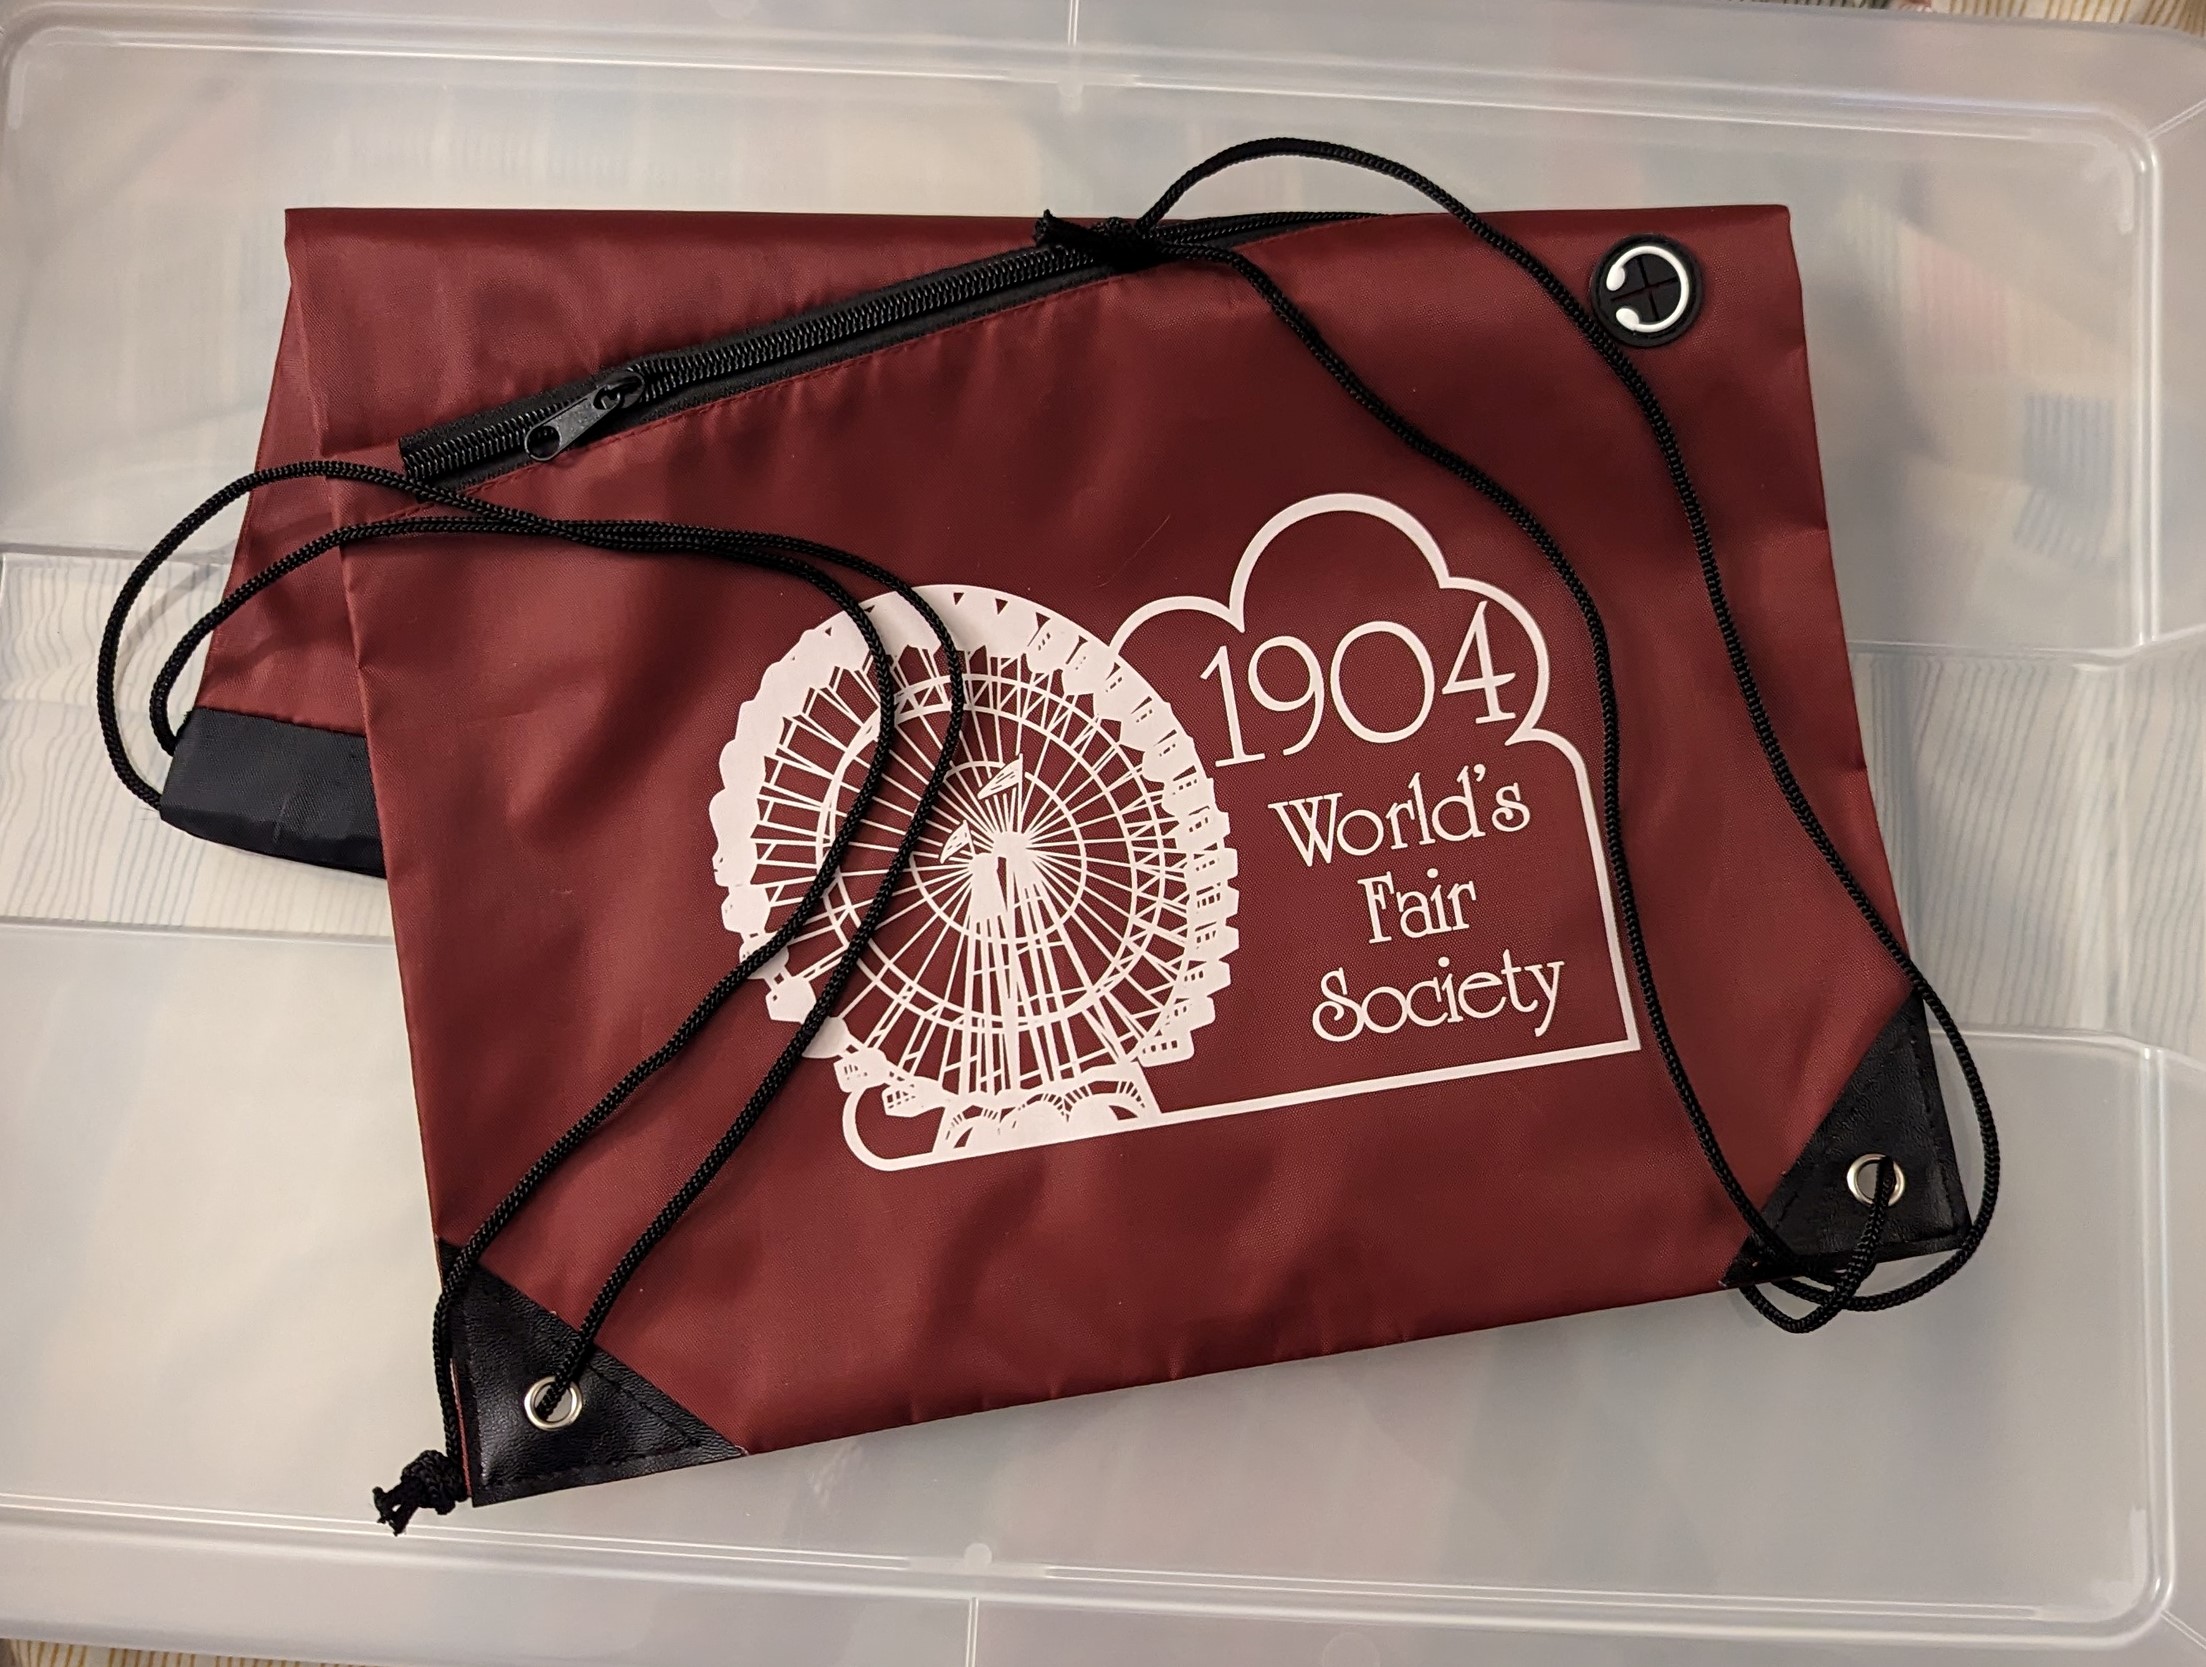 1904 World's Fair Society Drawstring Bag